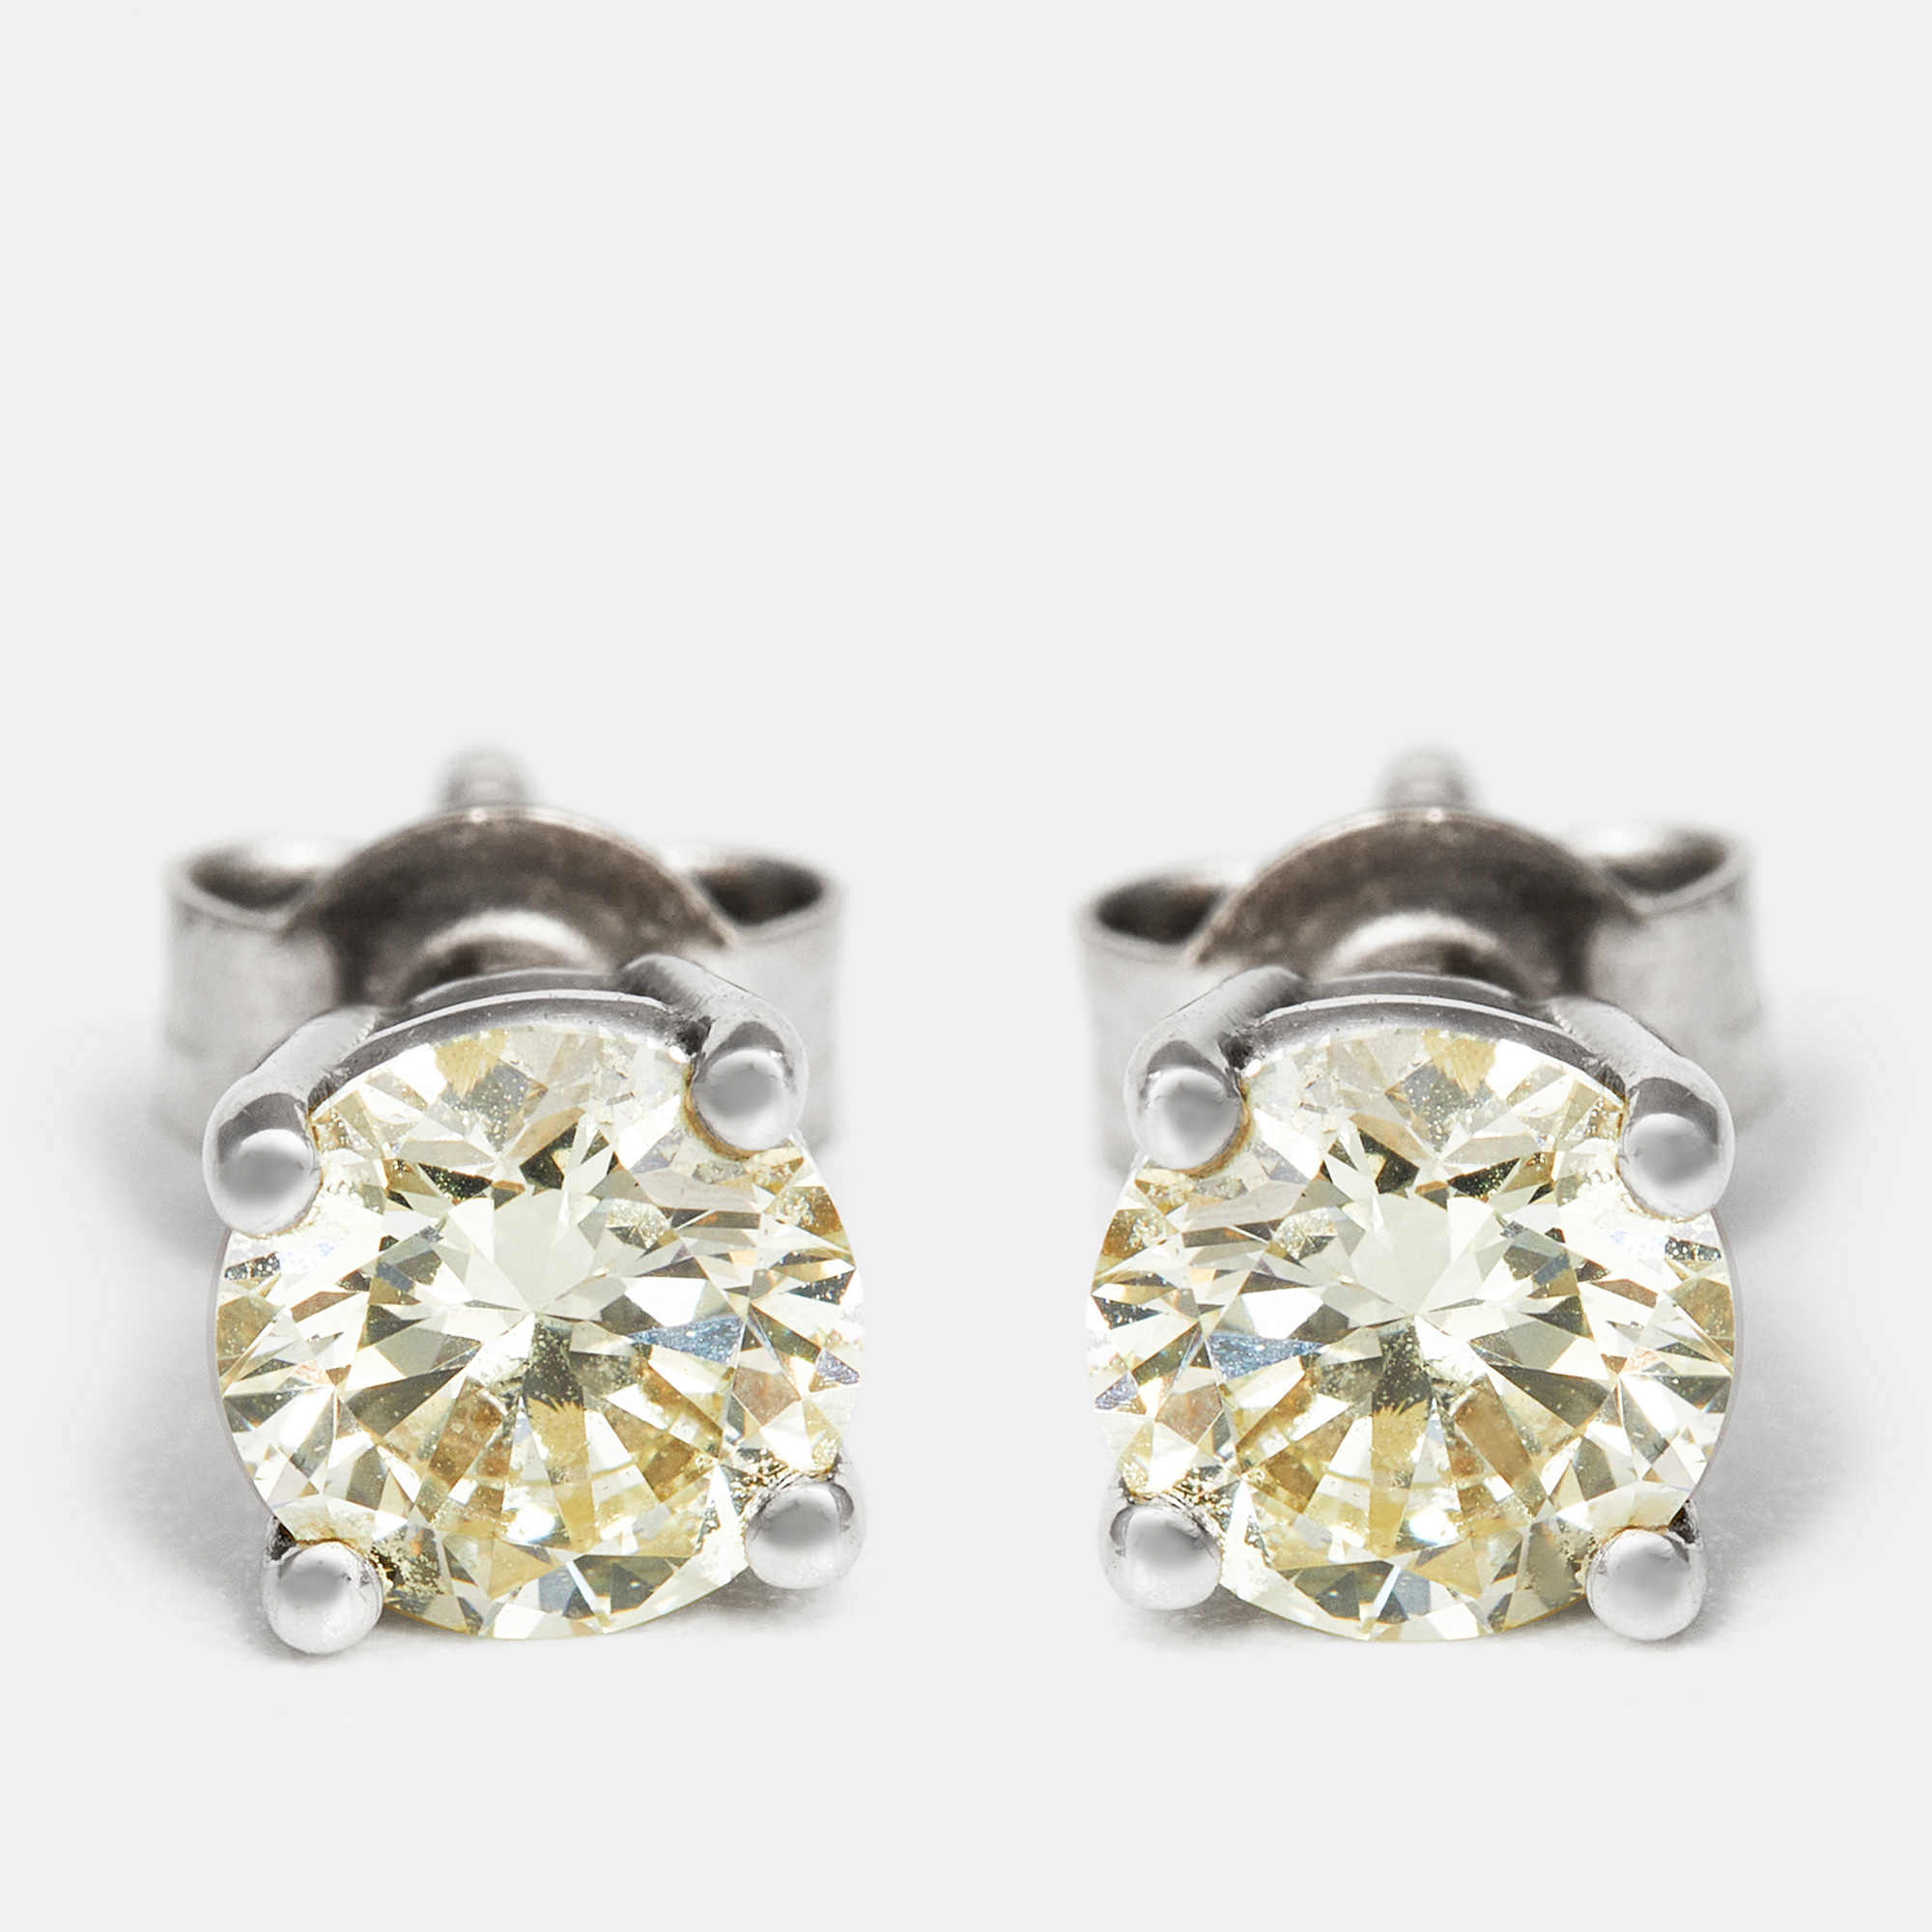 The diamond edit daily wear elegant solitaire diamonds (1.06 ct) 18k white gold stud earrings